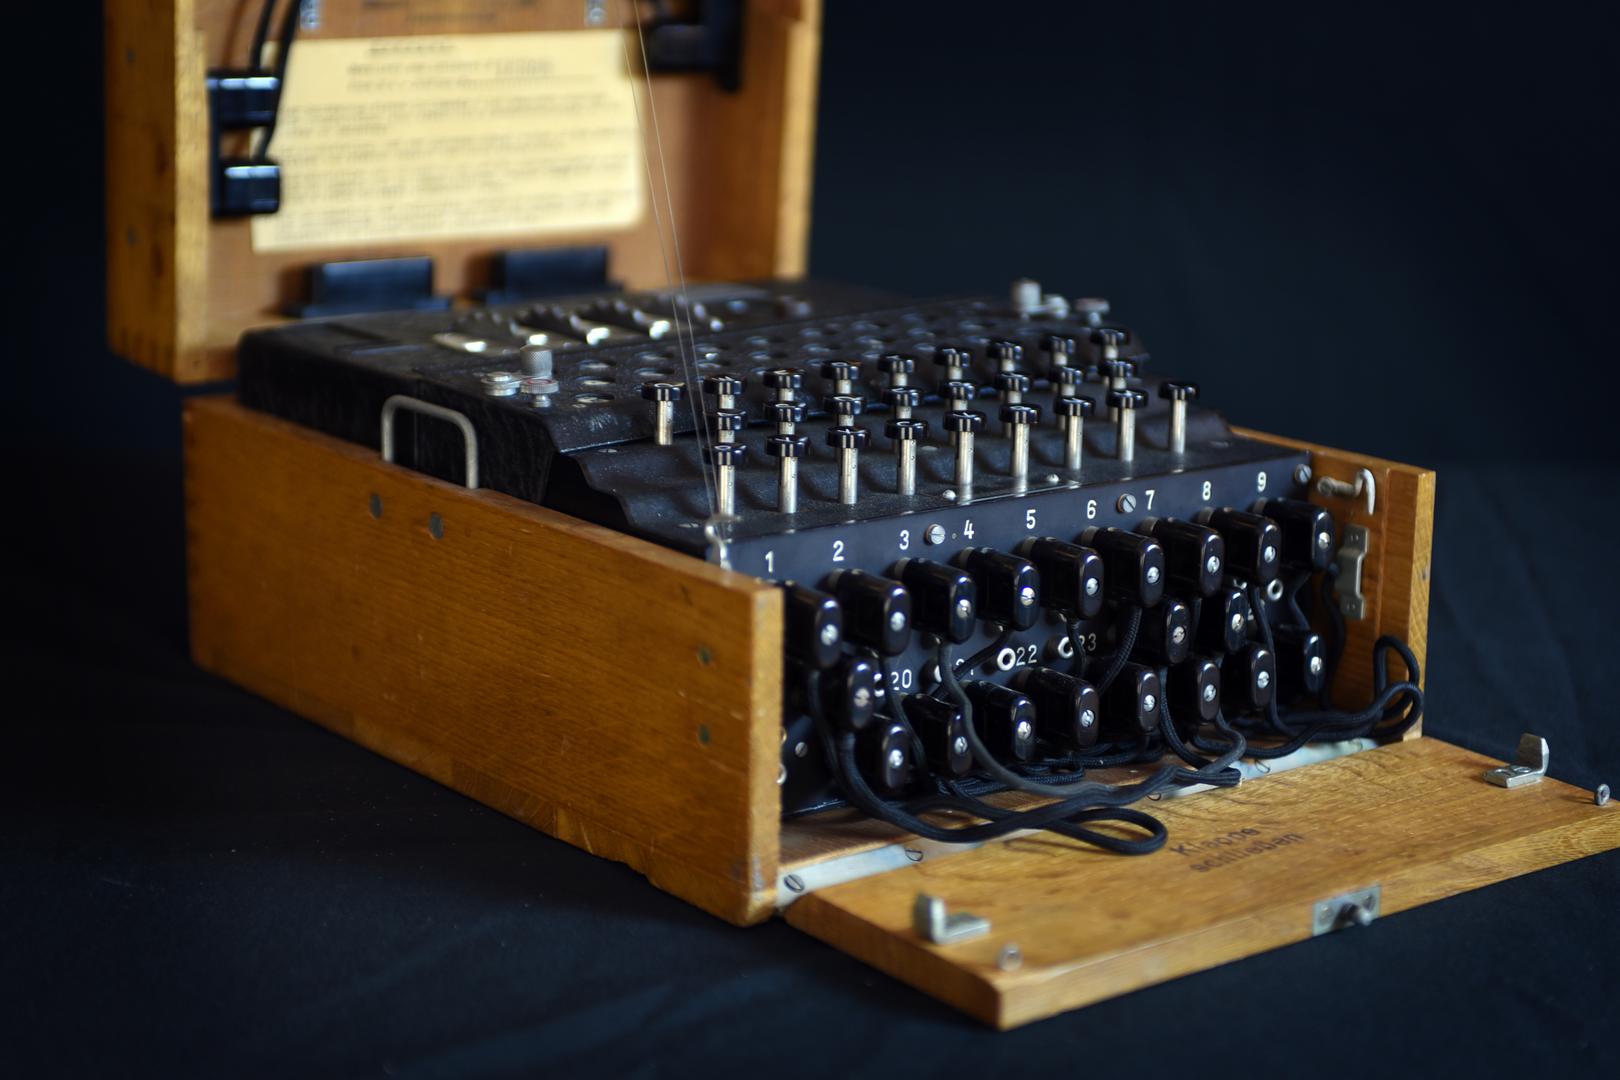 German Enigma Machine